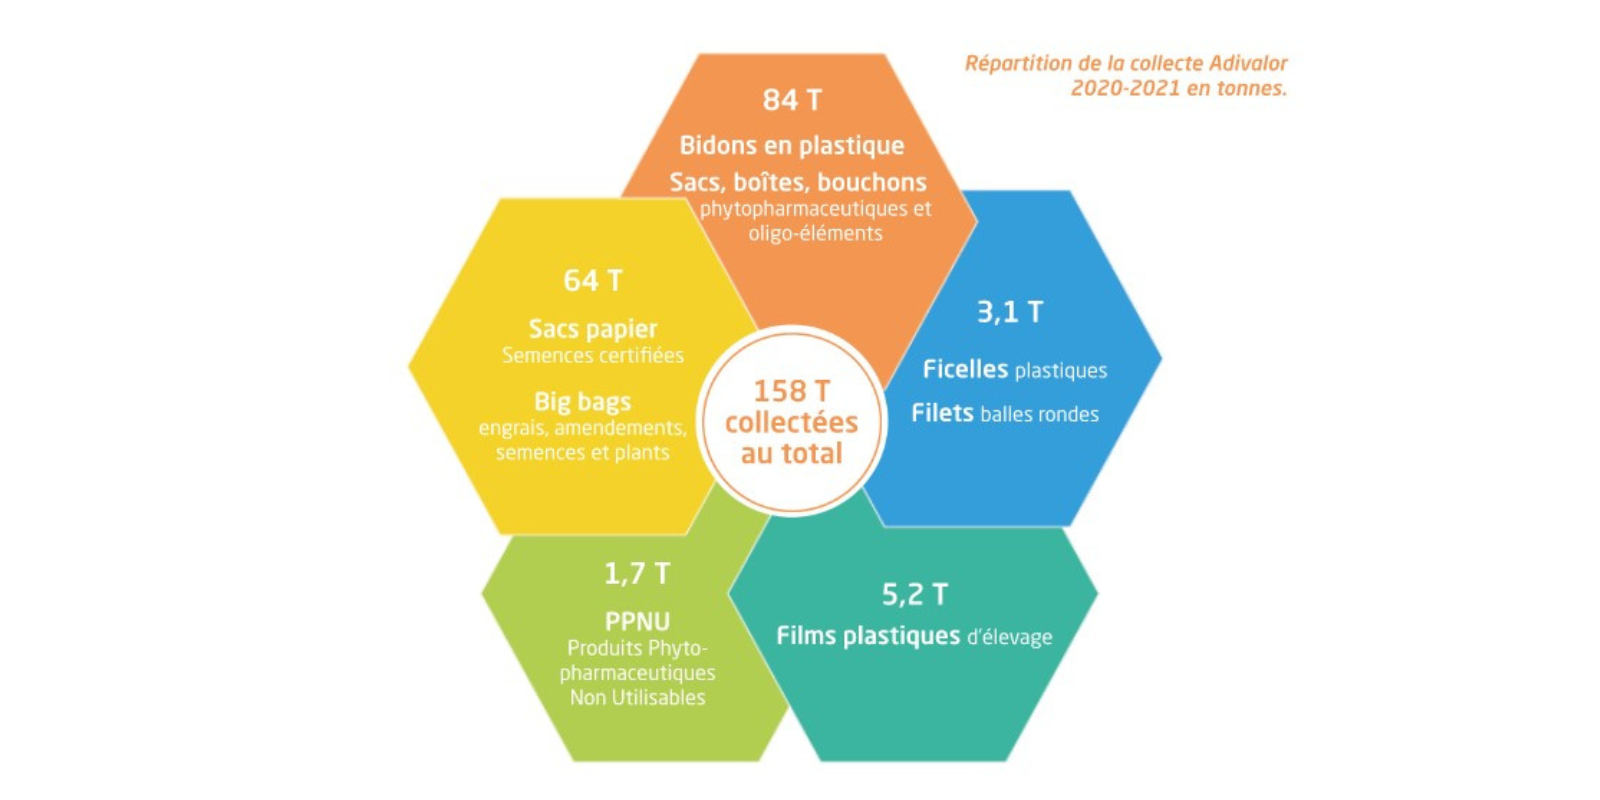 Rapport RSE 2021 Valfrance : Bravo aux agris-recycleurs